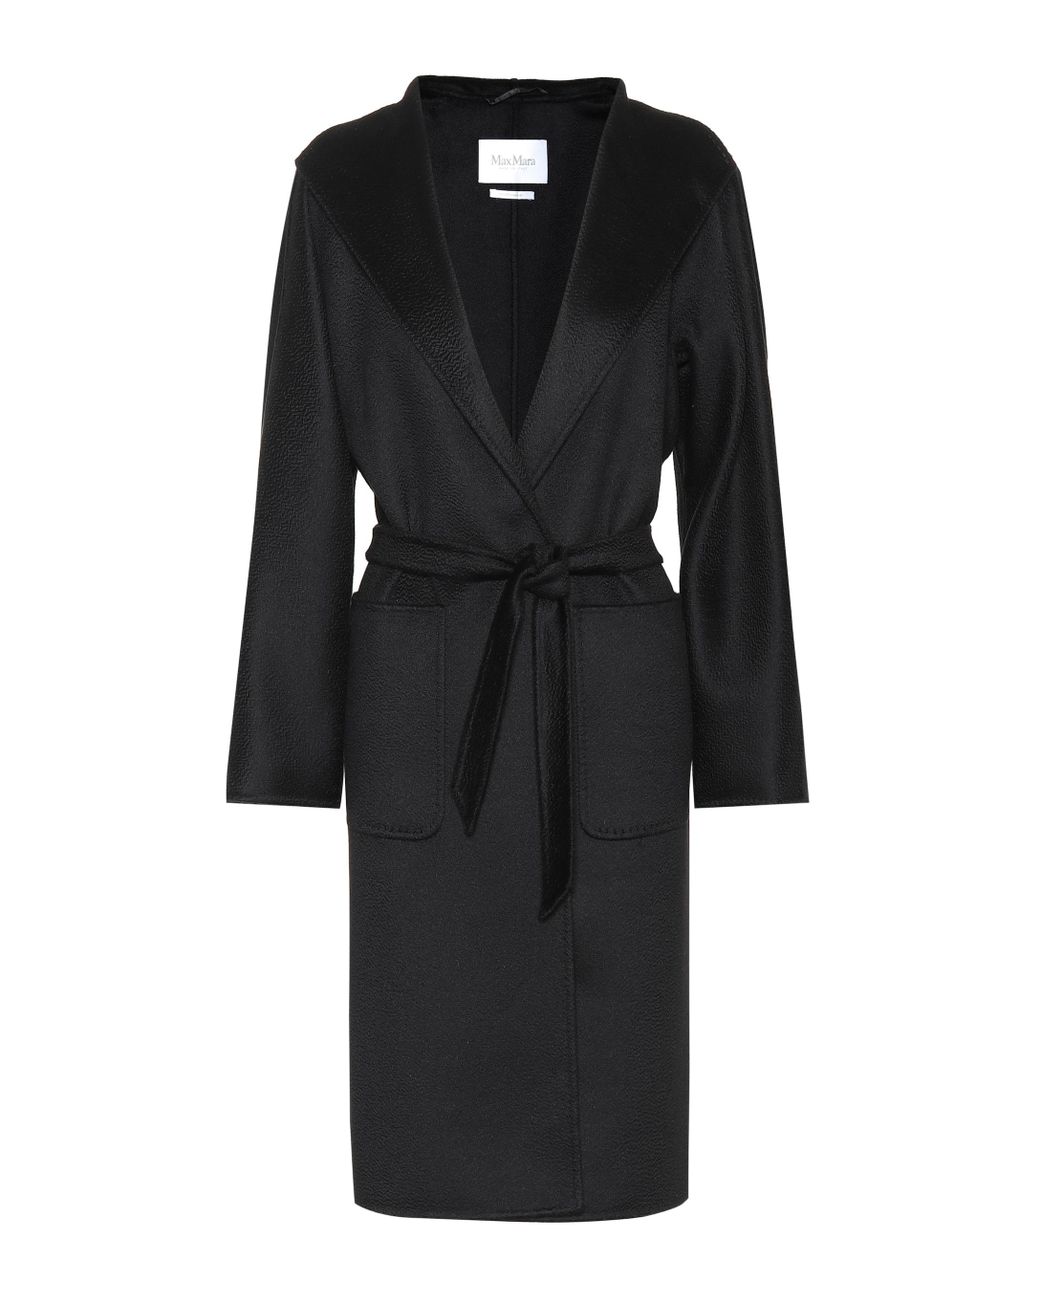 Lyst - Max Mara Lilia Cashmere Coat in Black